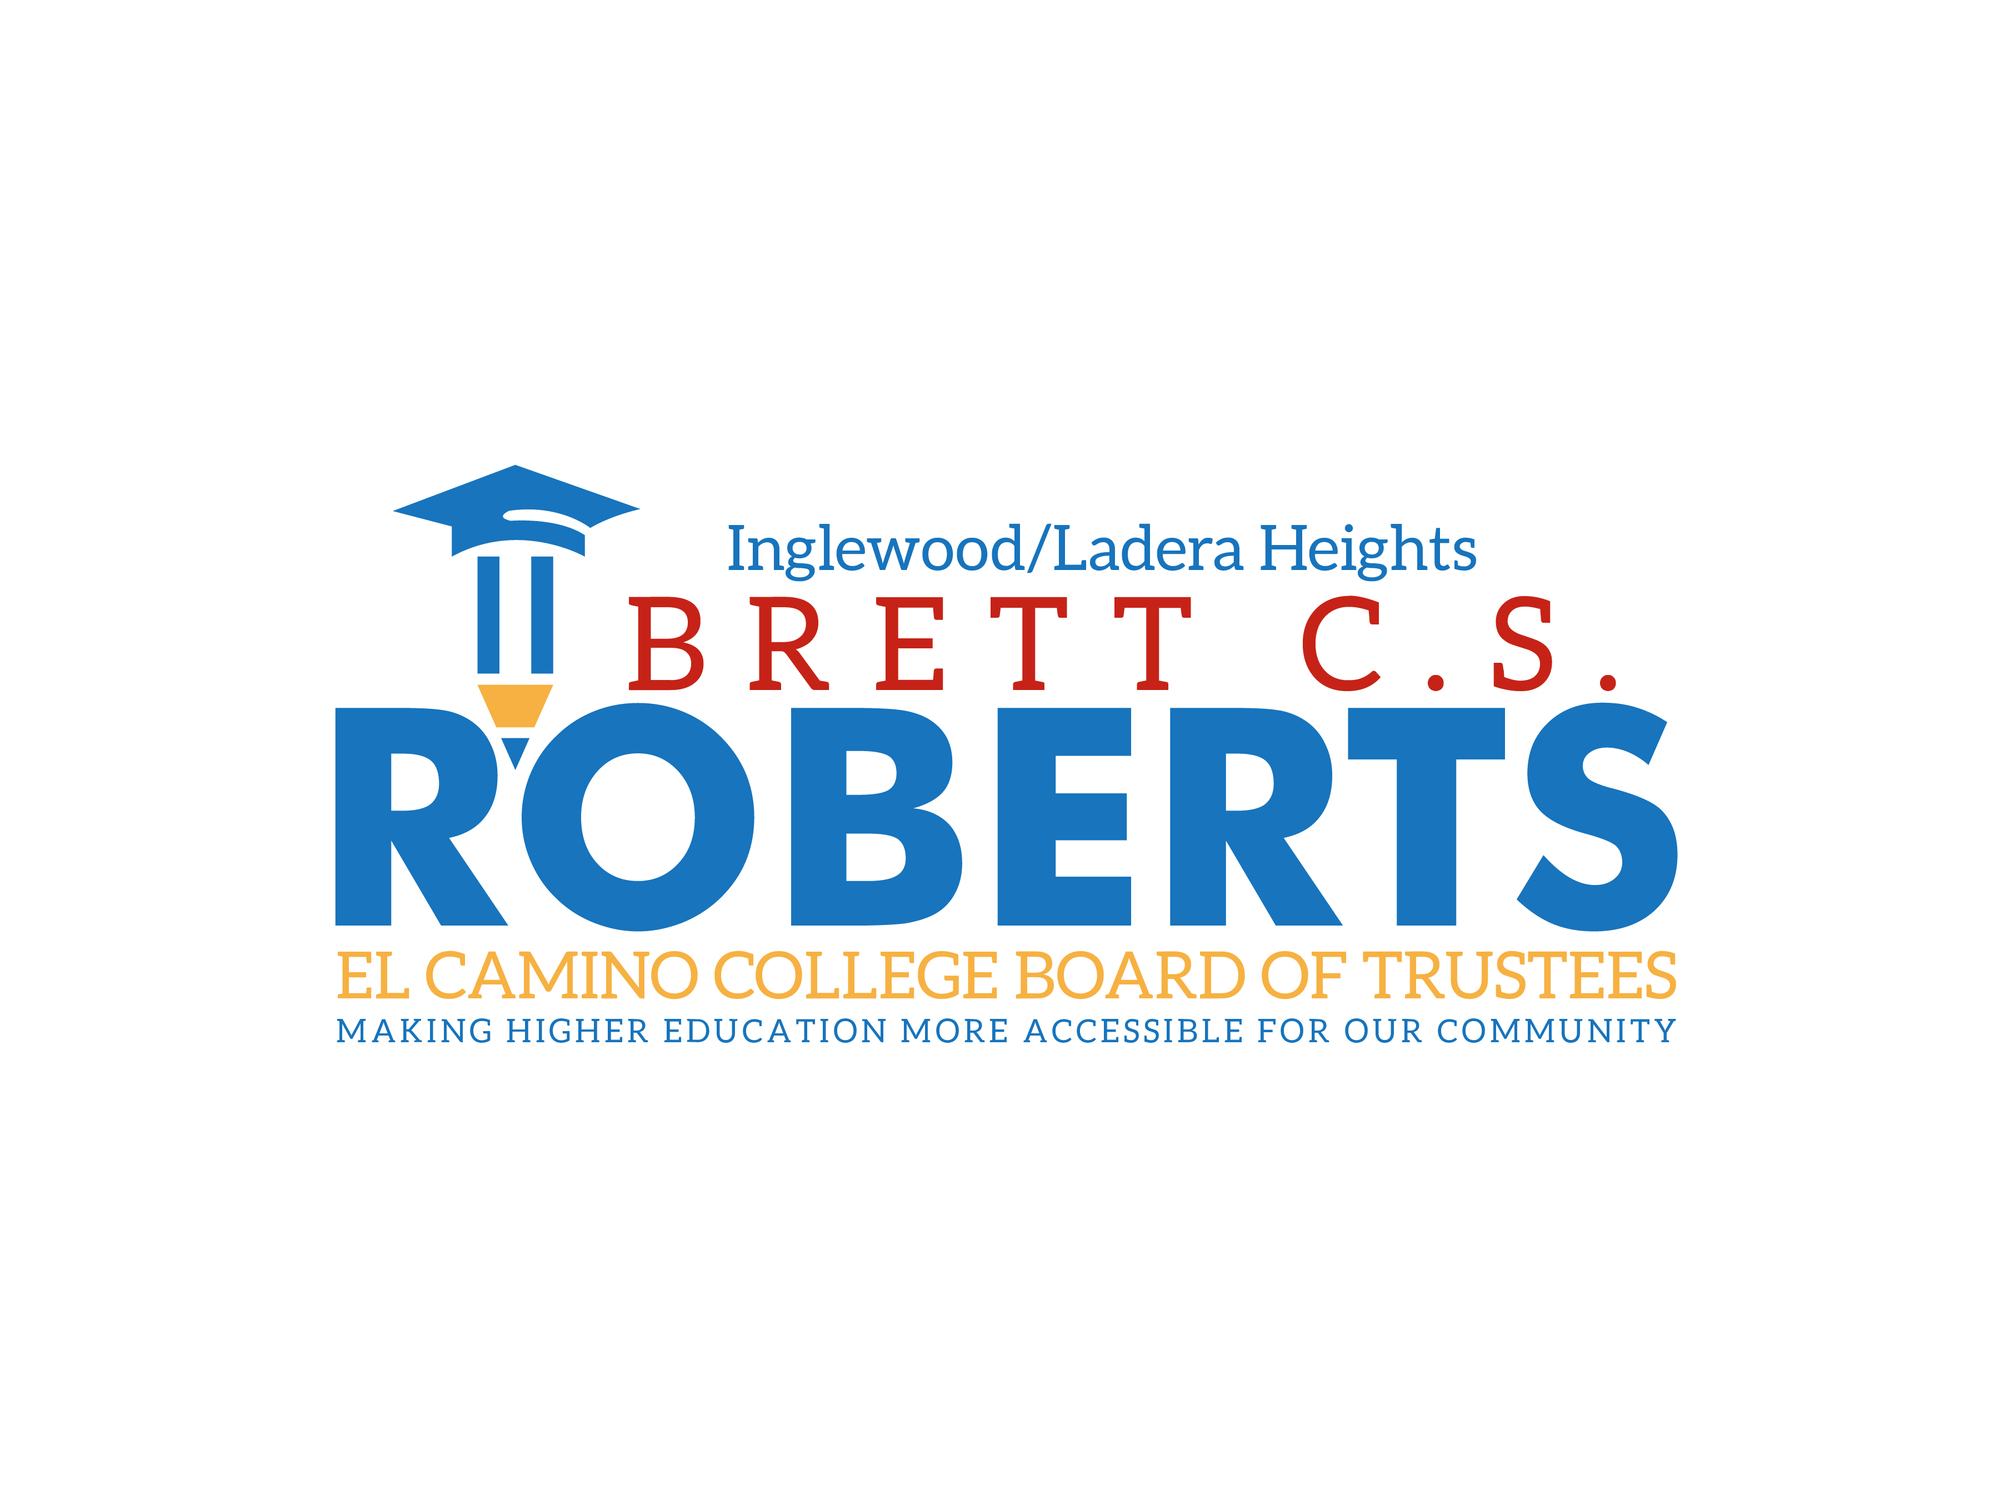 Brett C.S. Roberts for El Camino College Board of Trustees